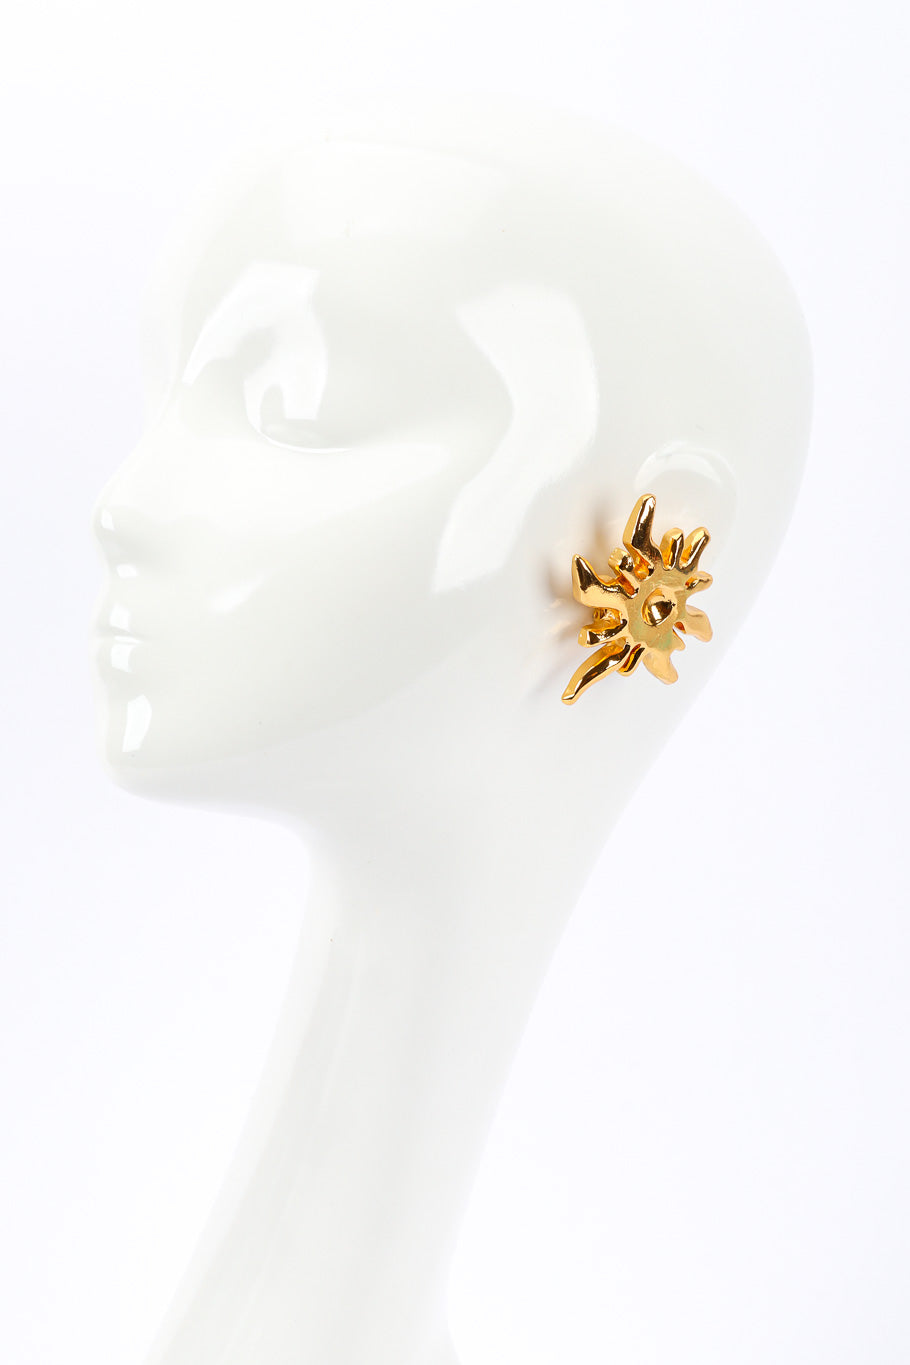 Sunburst earrings by Christian Lacroix on white background on mannequin head @recessla